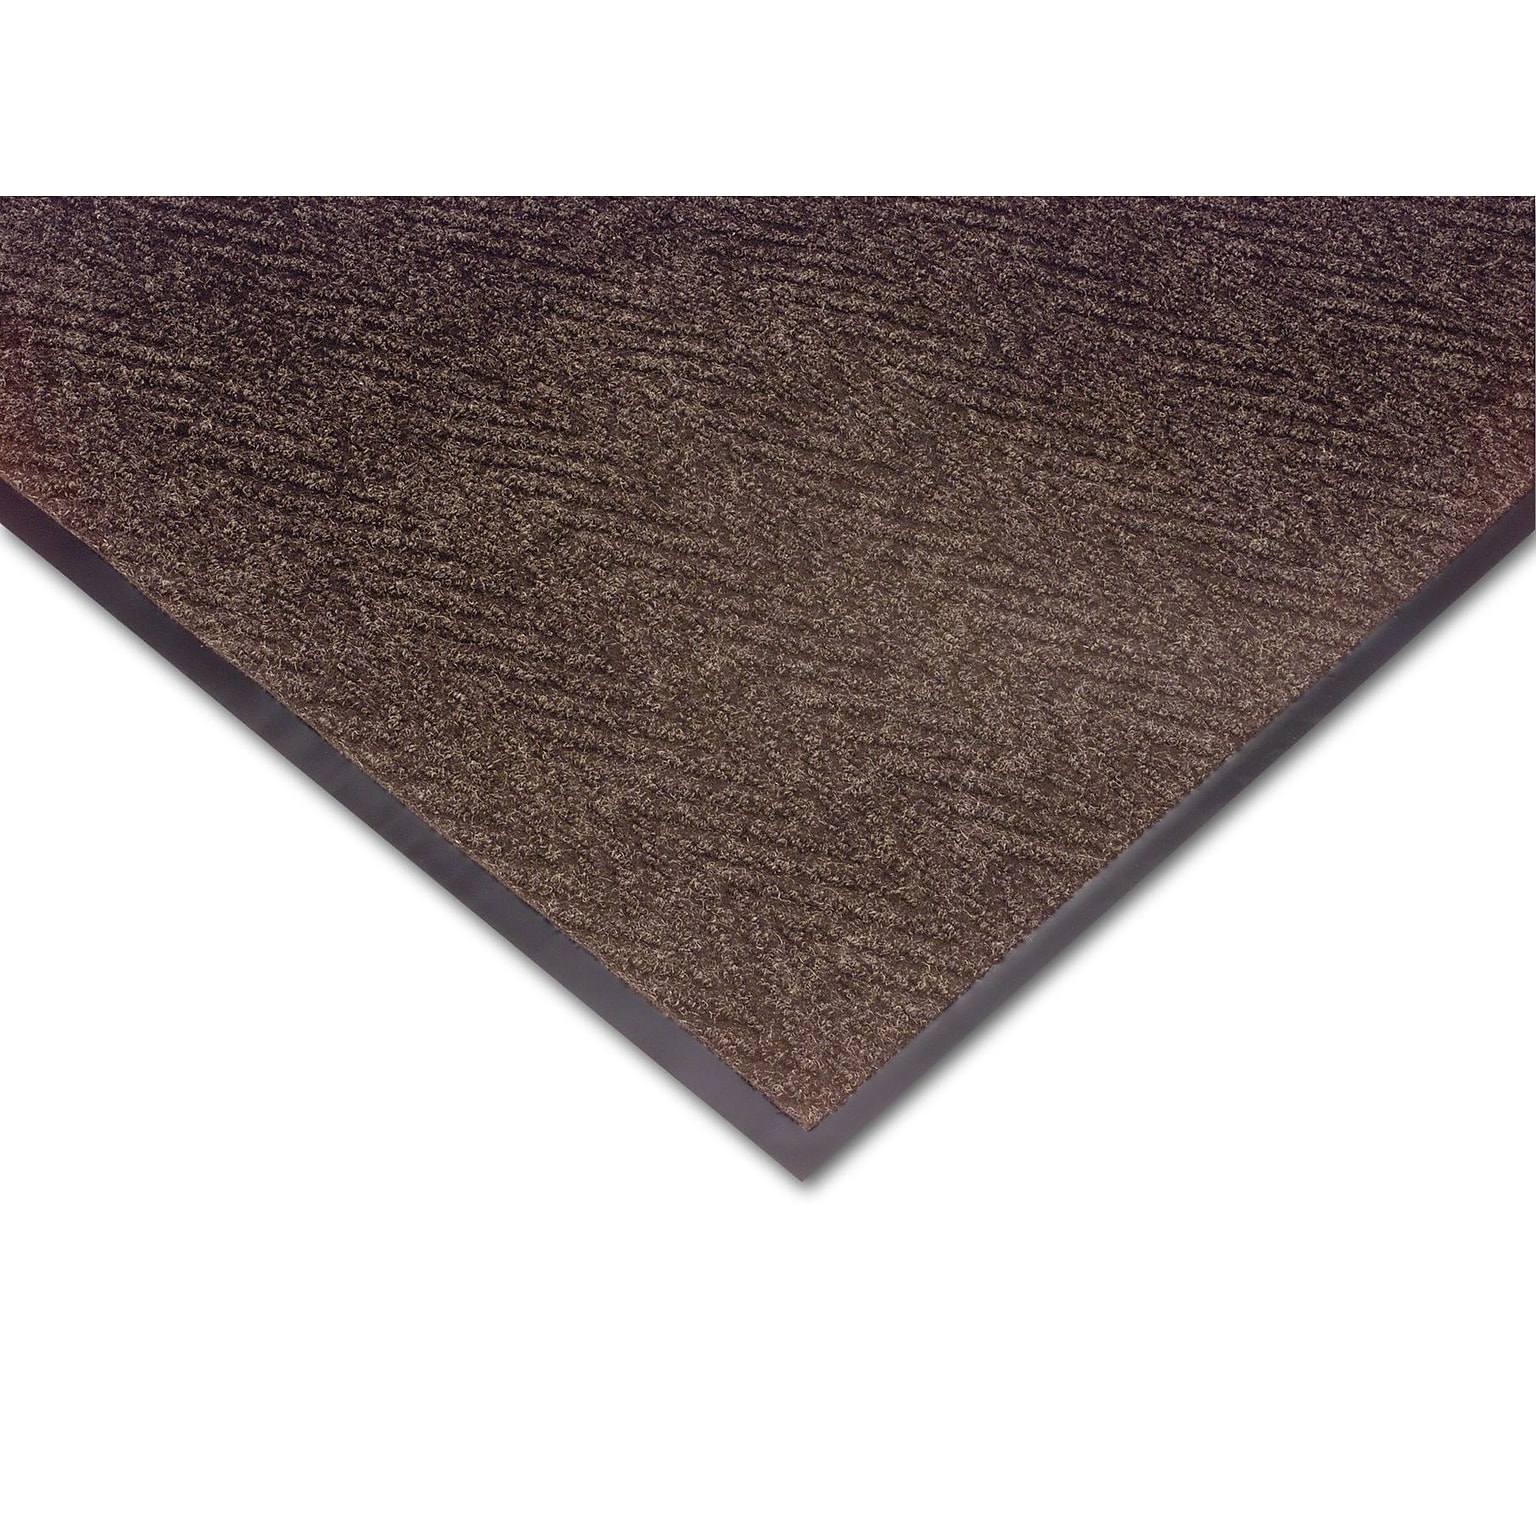 NoTrax Akro Chevron Fiber Best Entrance Floor Mat, 48 x 72, Dark Brown (105S0046BR)